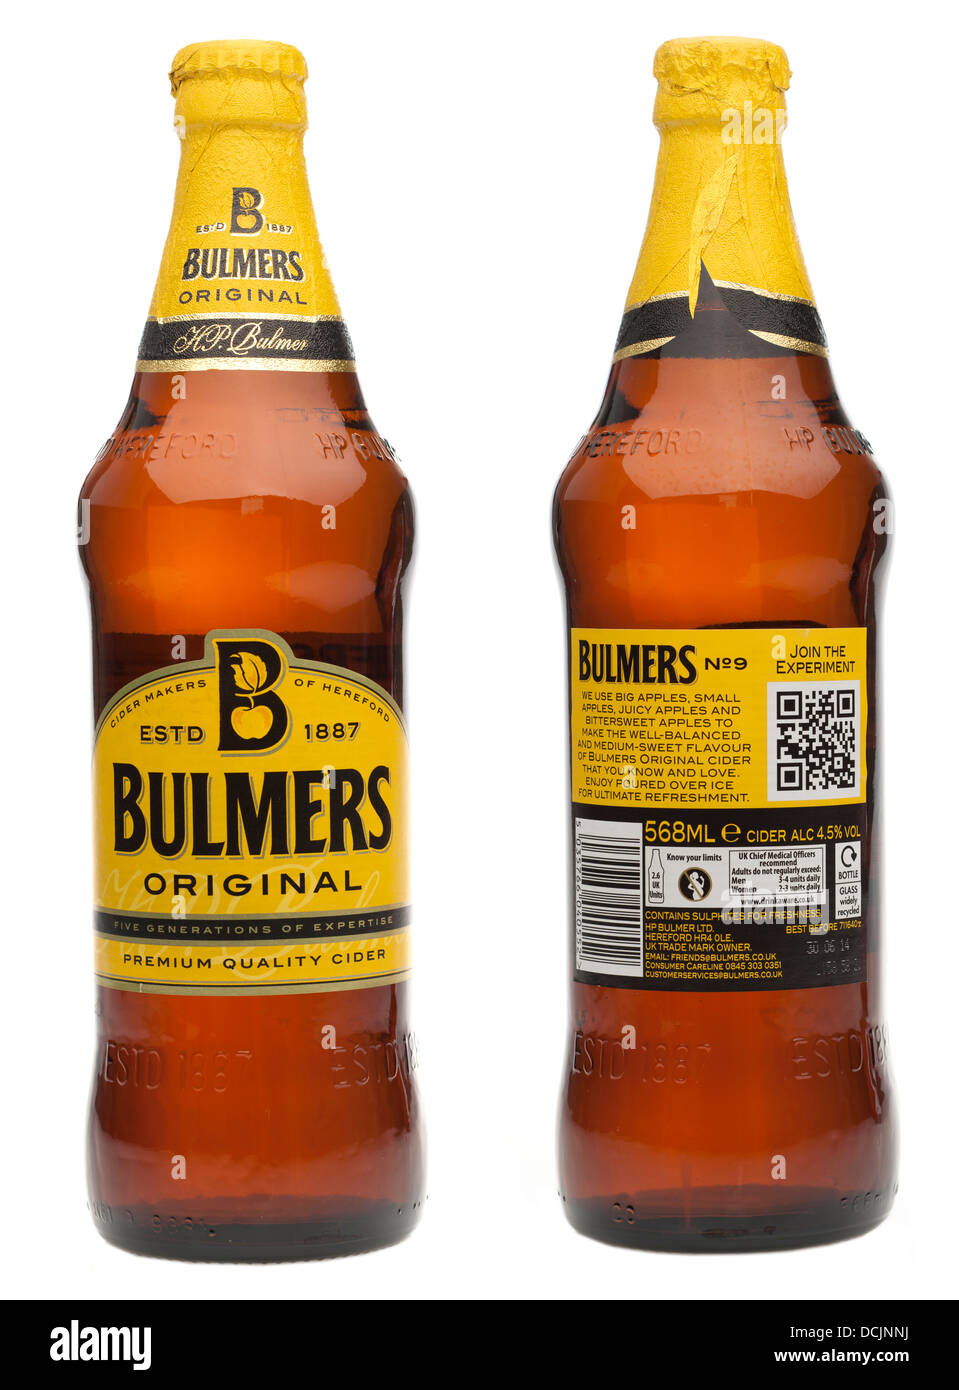 Two bottles of Bulmers premium quality original cider